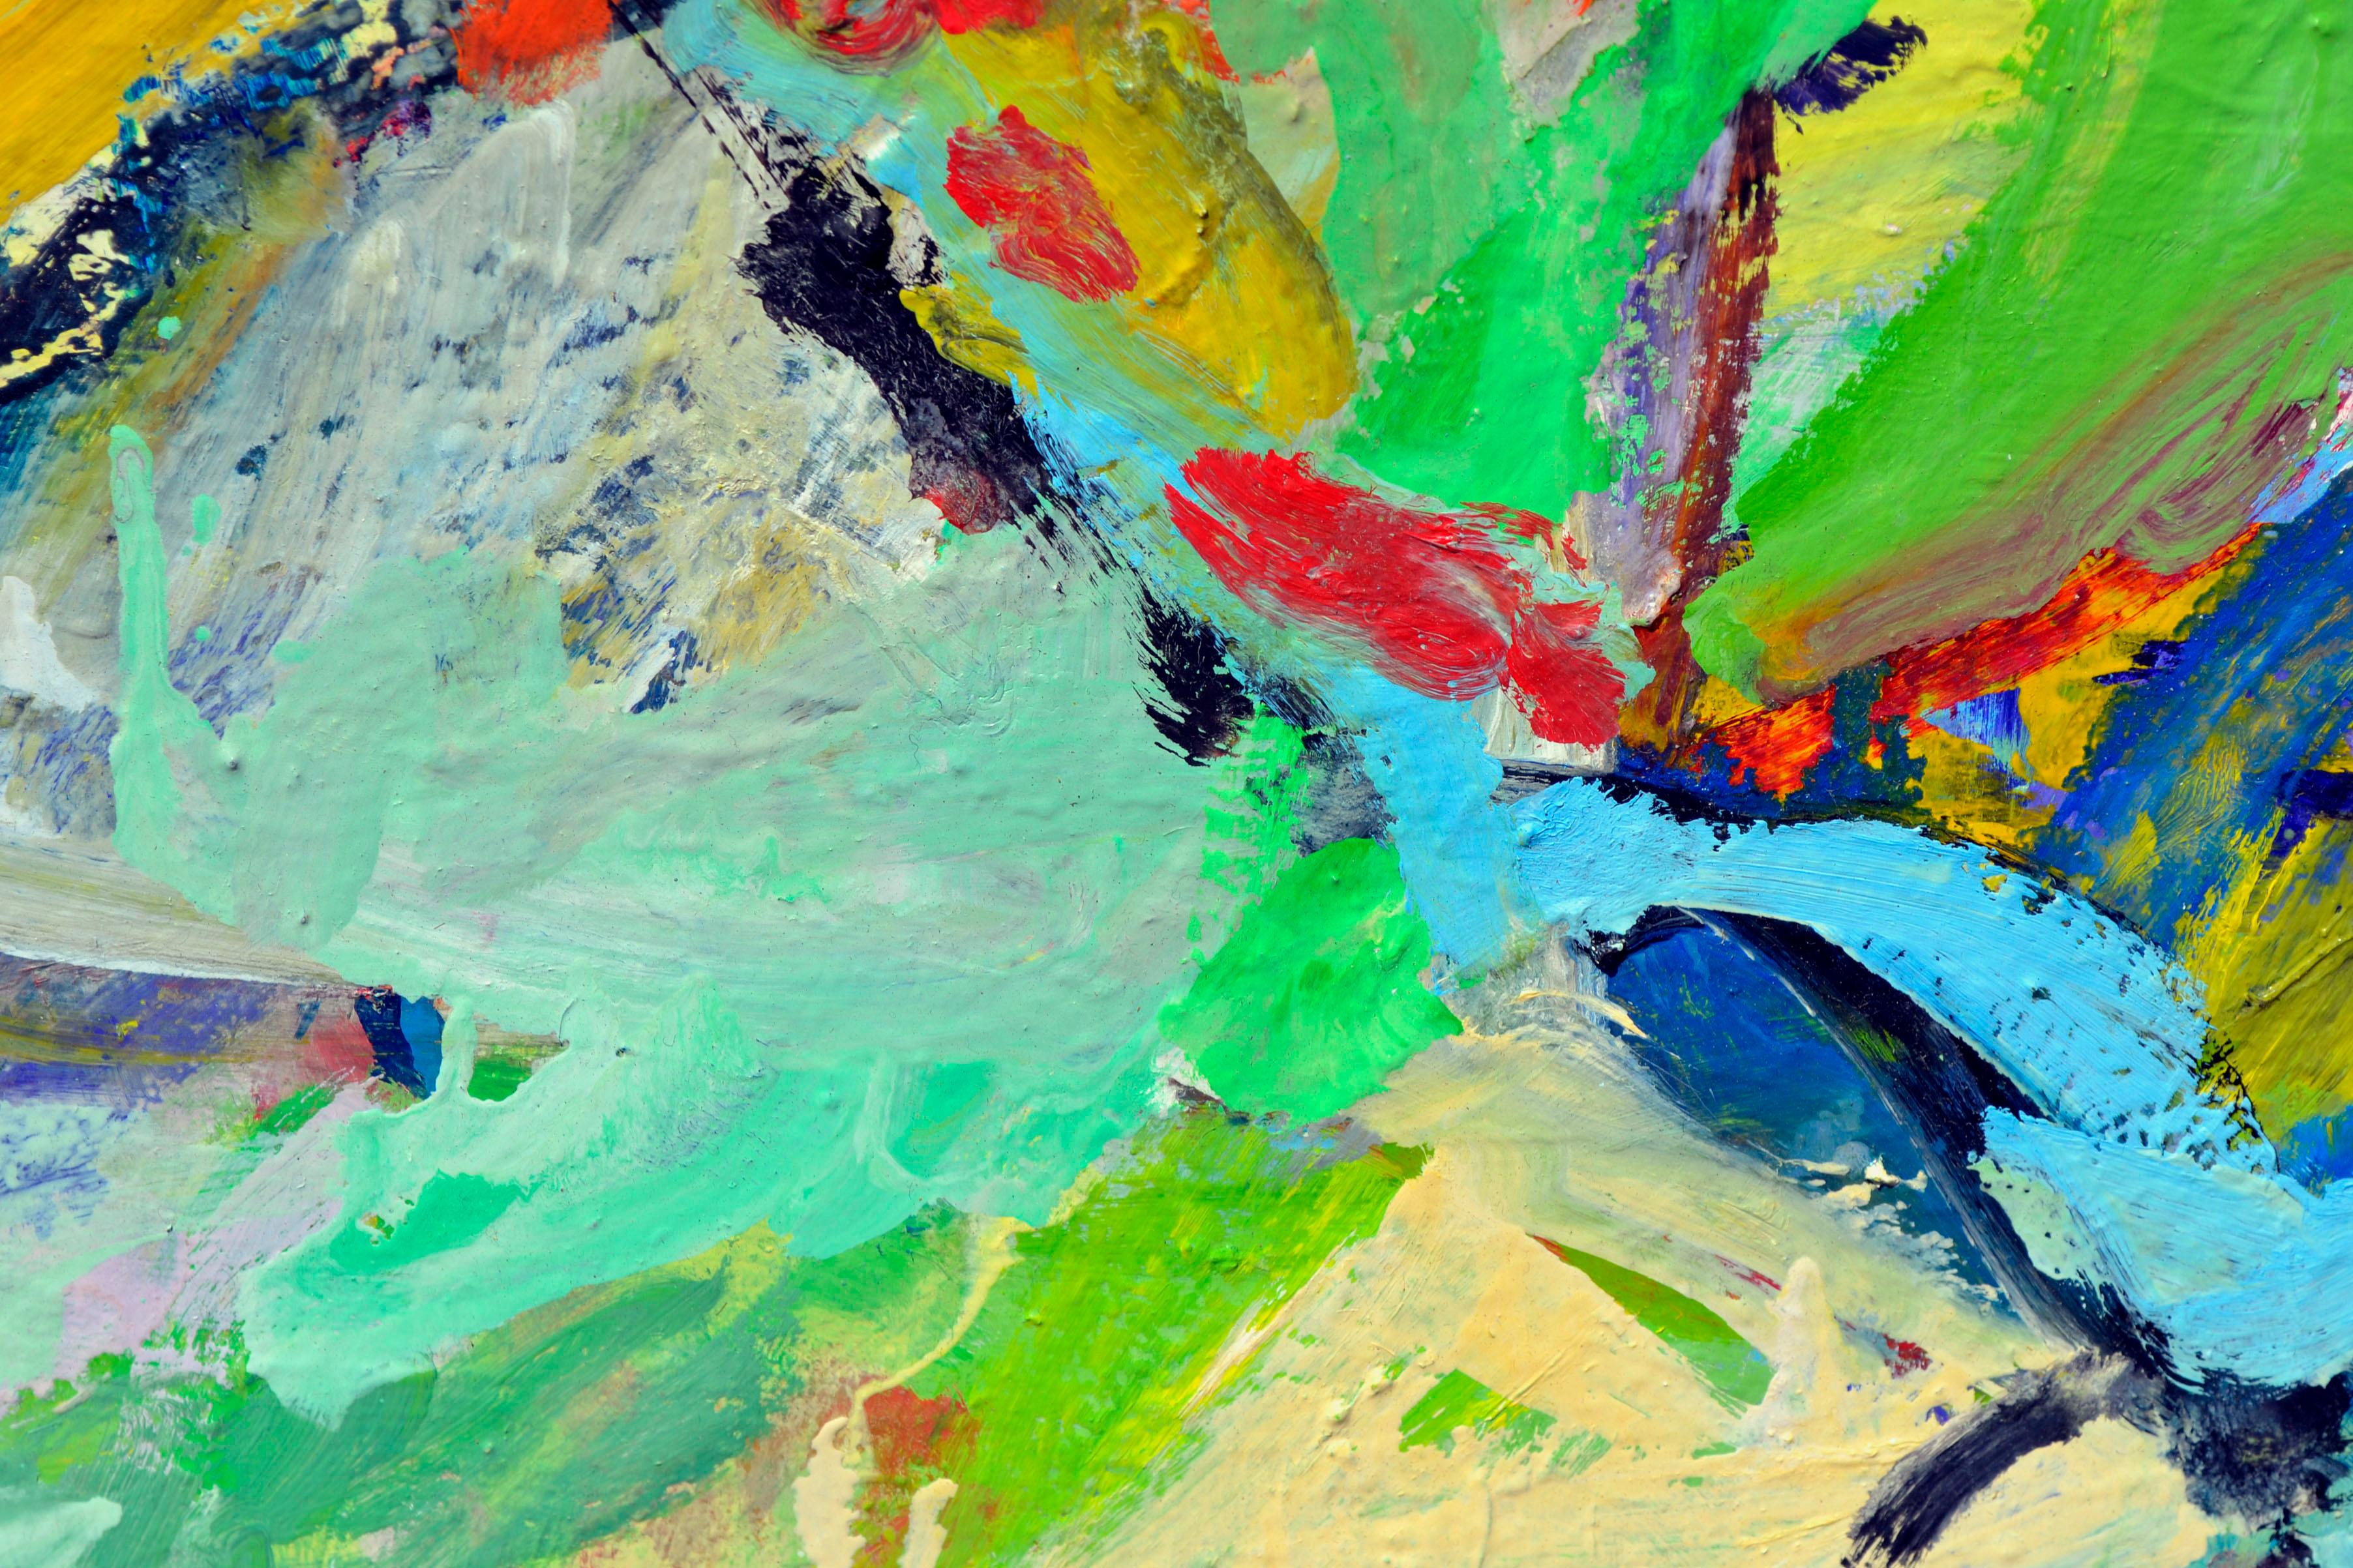 Leuchtend farbenfroher abstrakter Expressionismus  (Abstrakter Expressionismus), Painting, von Anthony Rappa